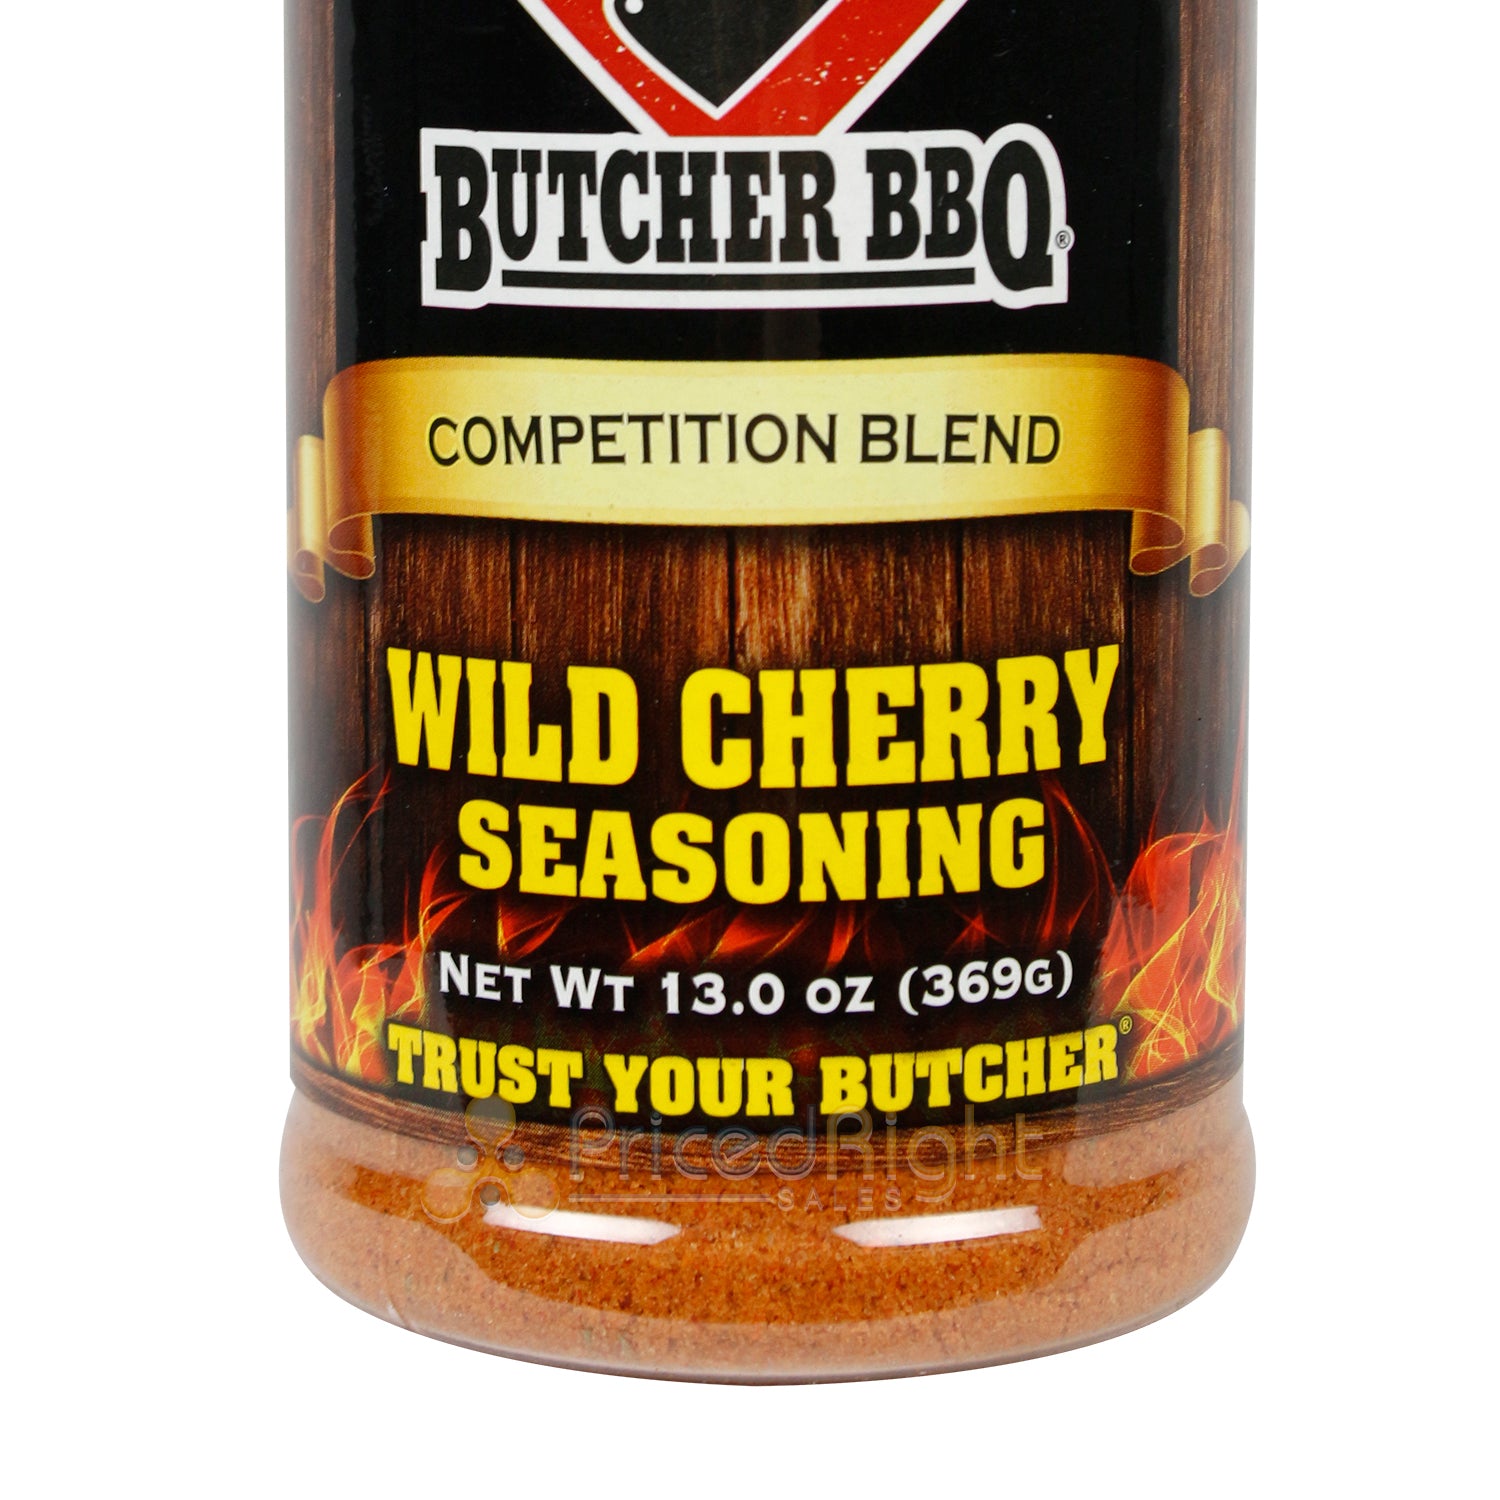 Butcher BBQ Wild Cherry Competition Blend 13 Oz Dry Rub Seasoning Gluten Free